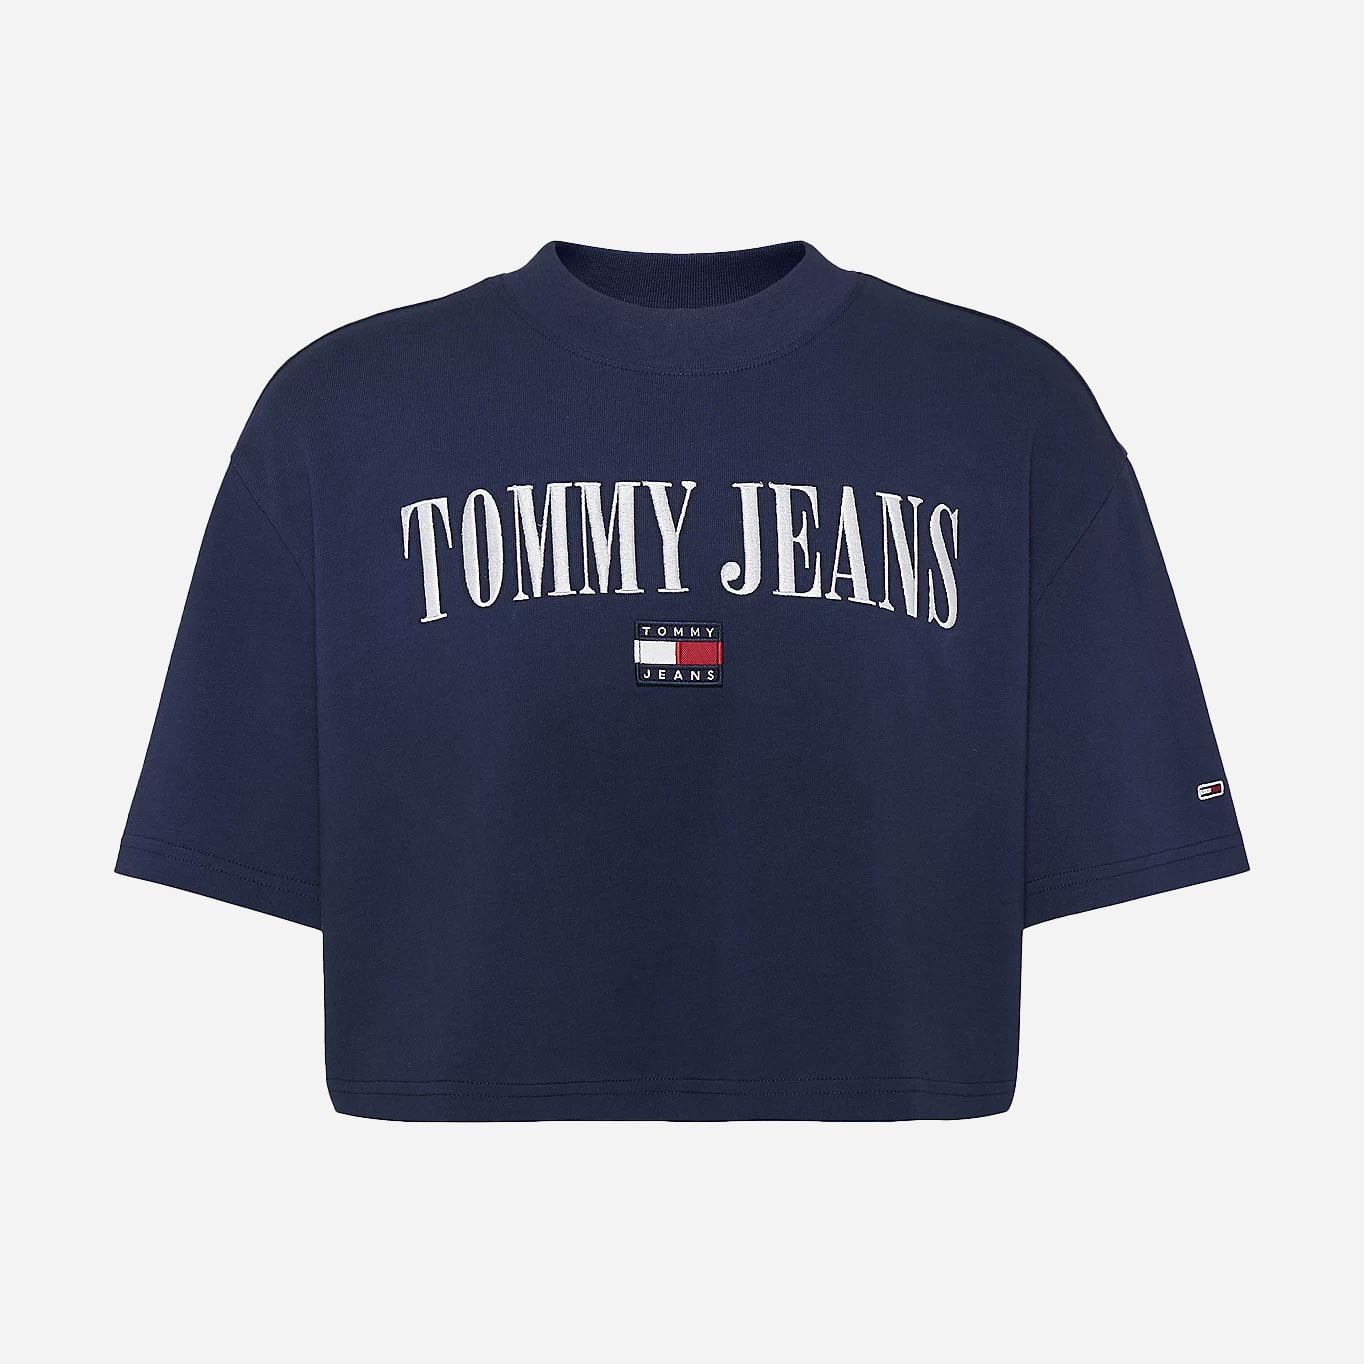 Tommy Jeans Women's Crop Archive Tee - Twilight Navy